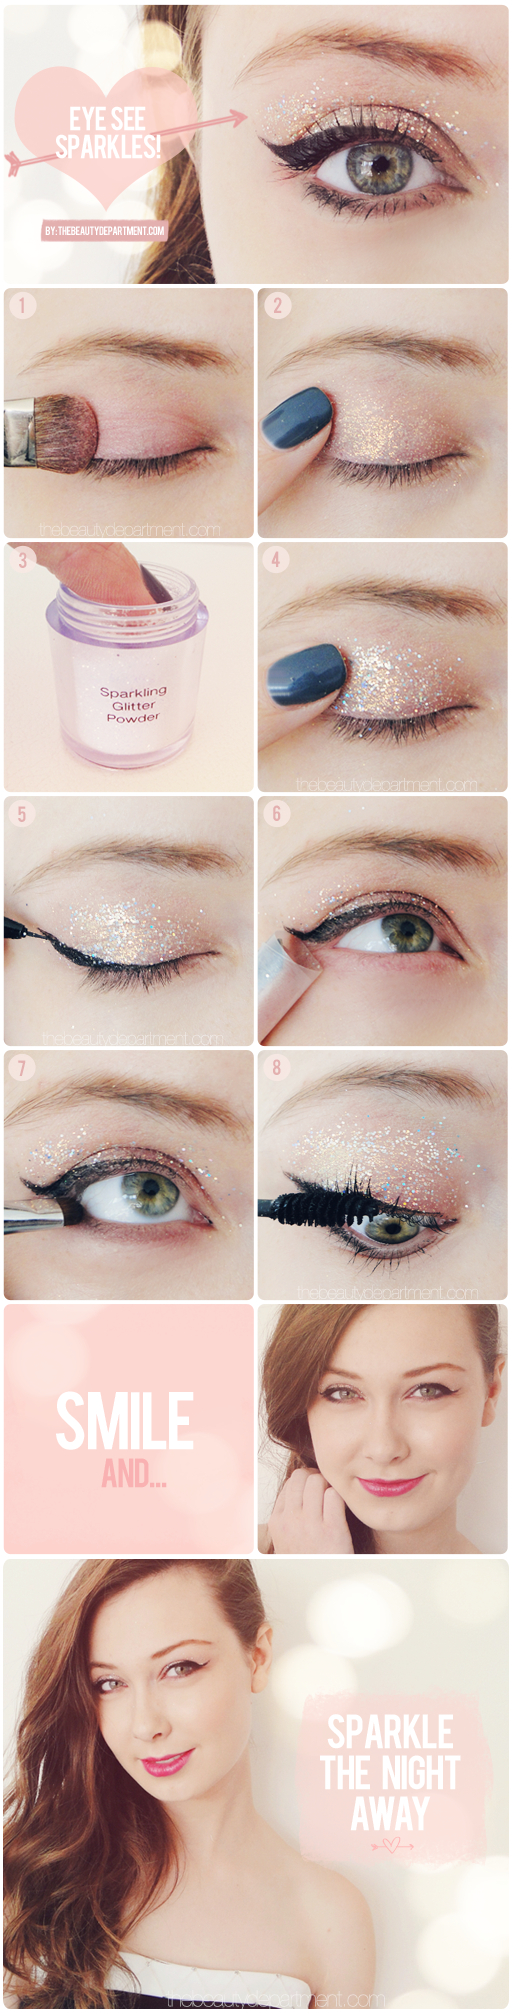 Glitter Eye Makeup Tutorial Glitter Eye Makeup Tutorials Are Quite Easy To Achieve